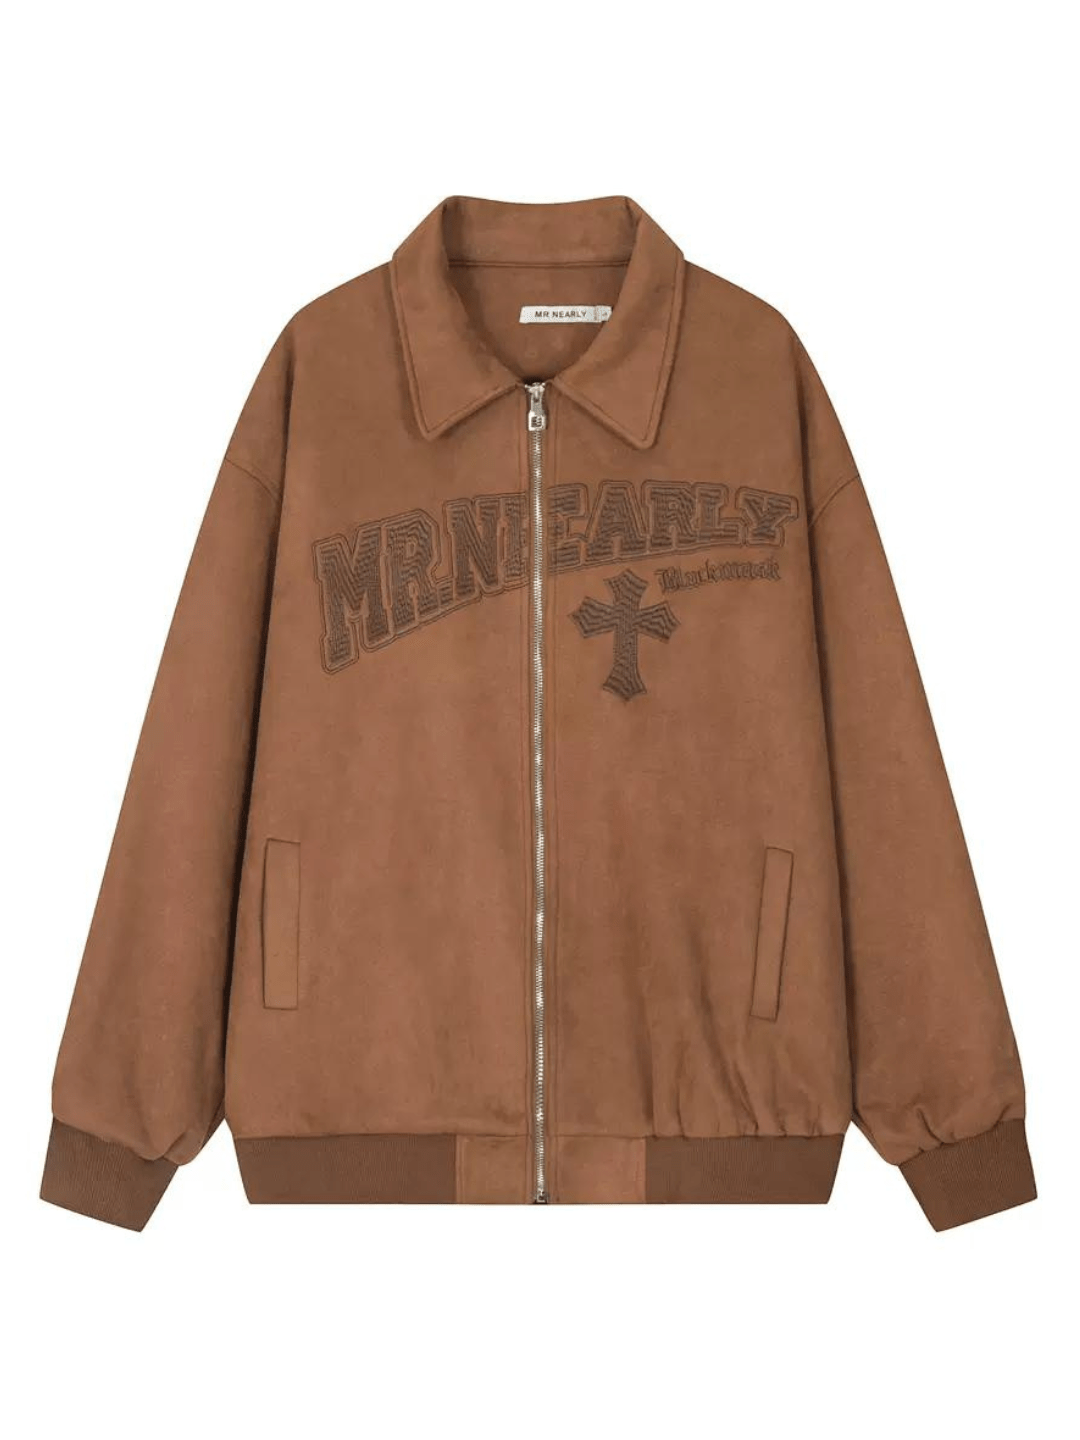 [MRNEARLY] suede vintage jacket na855